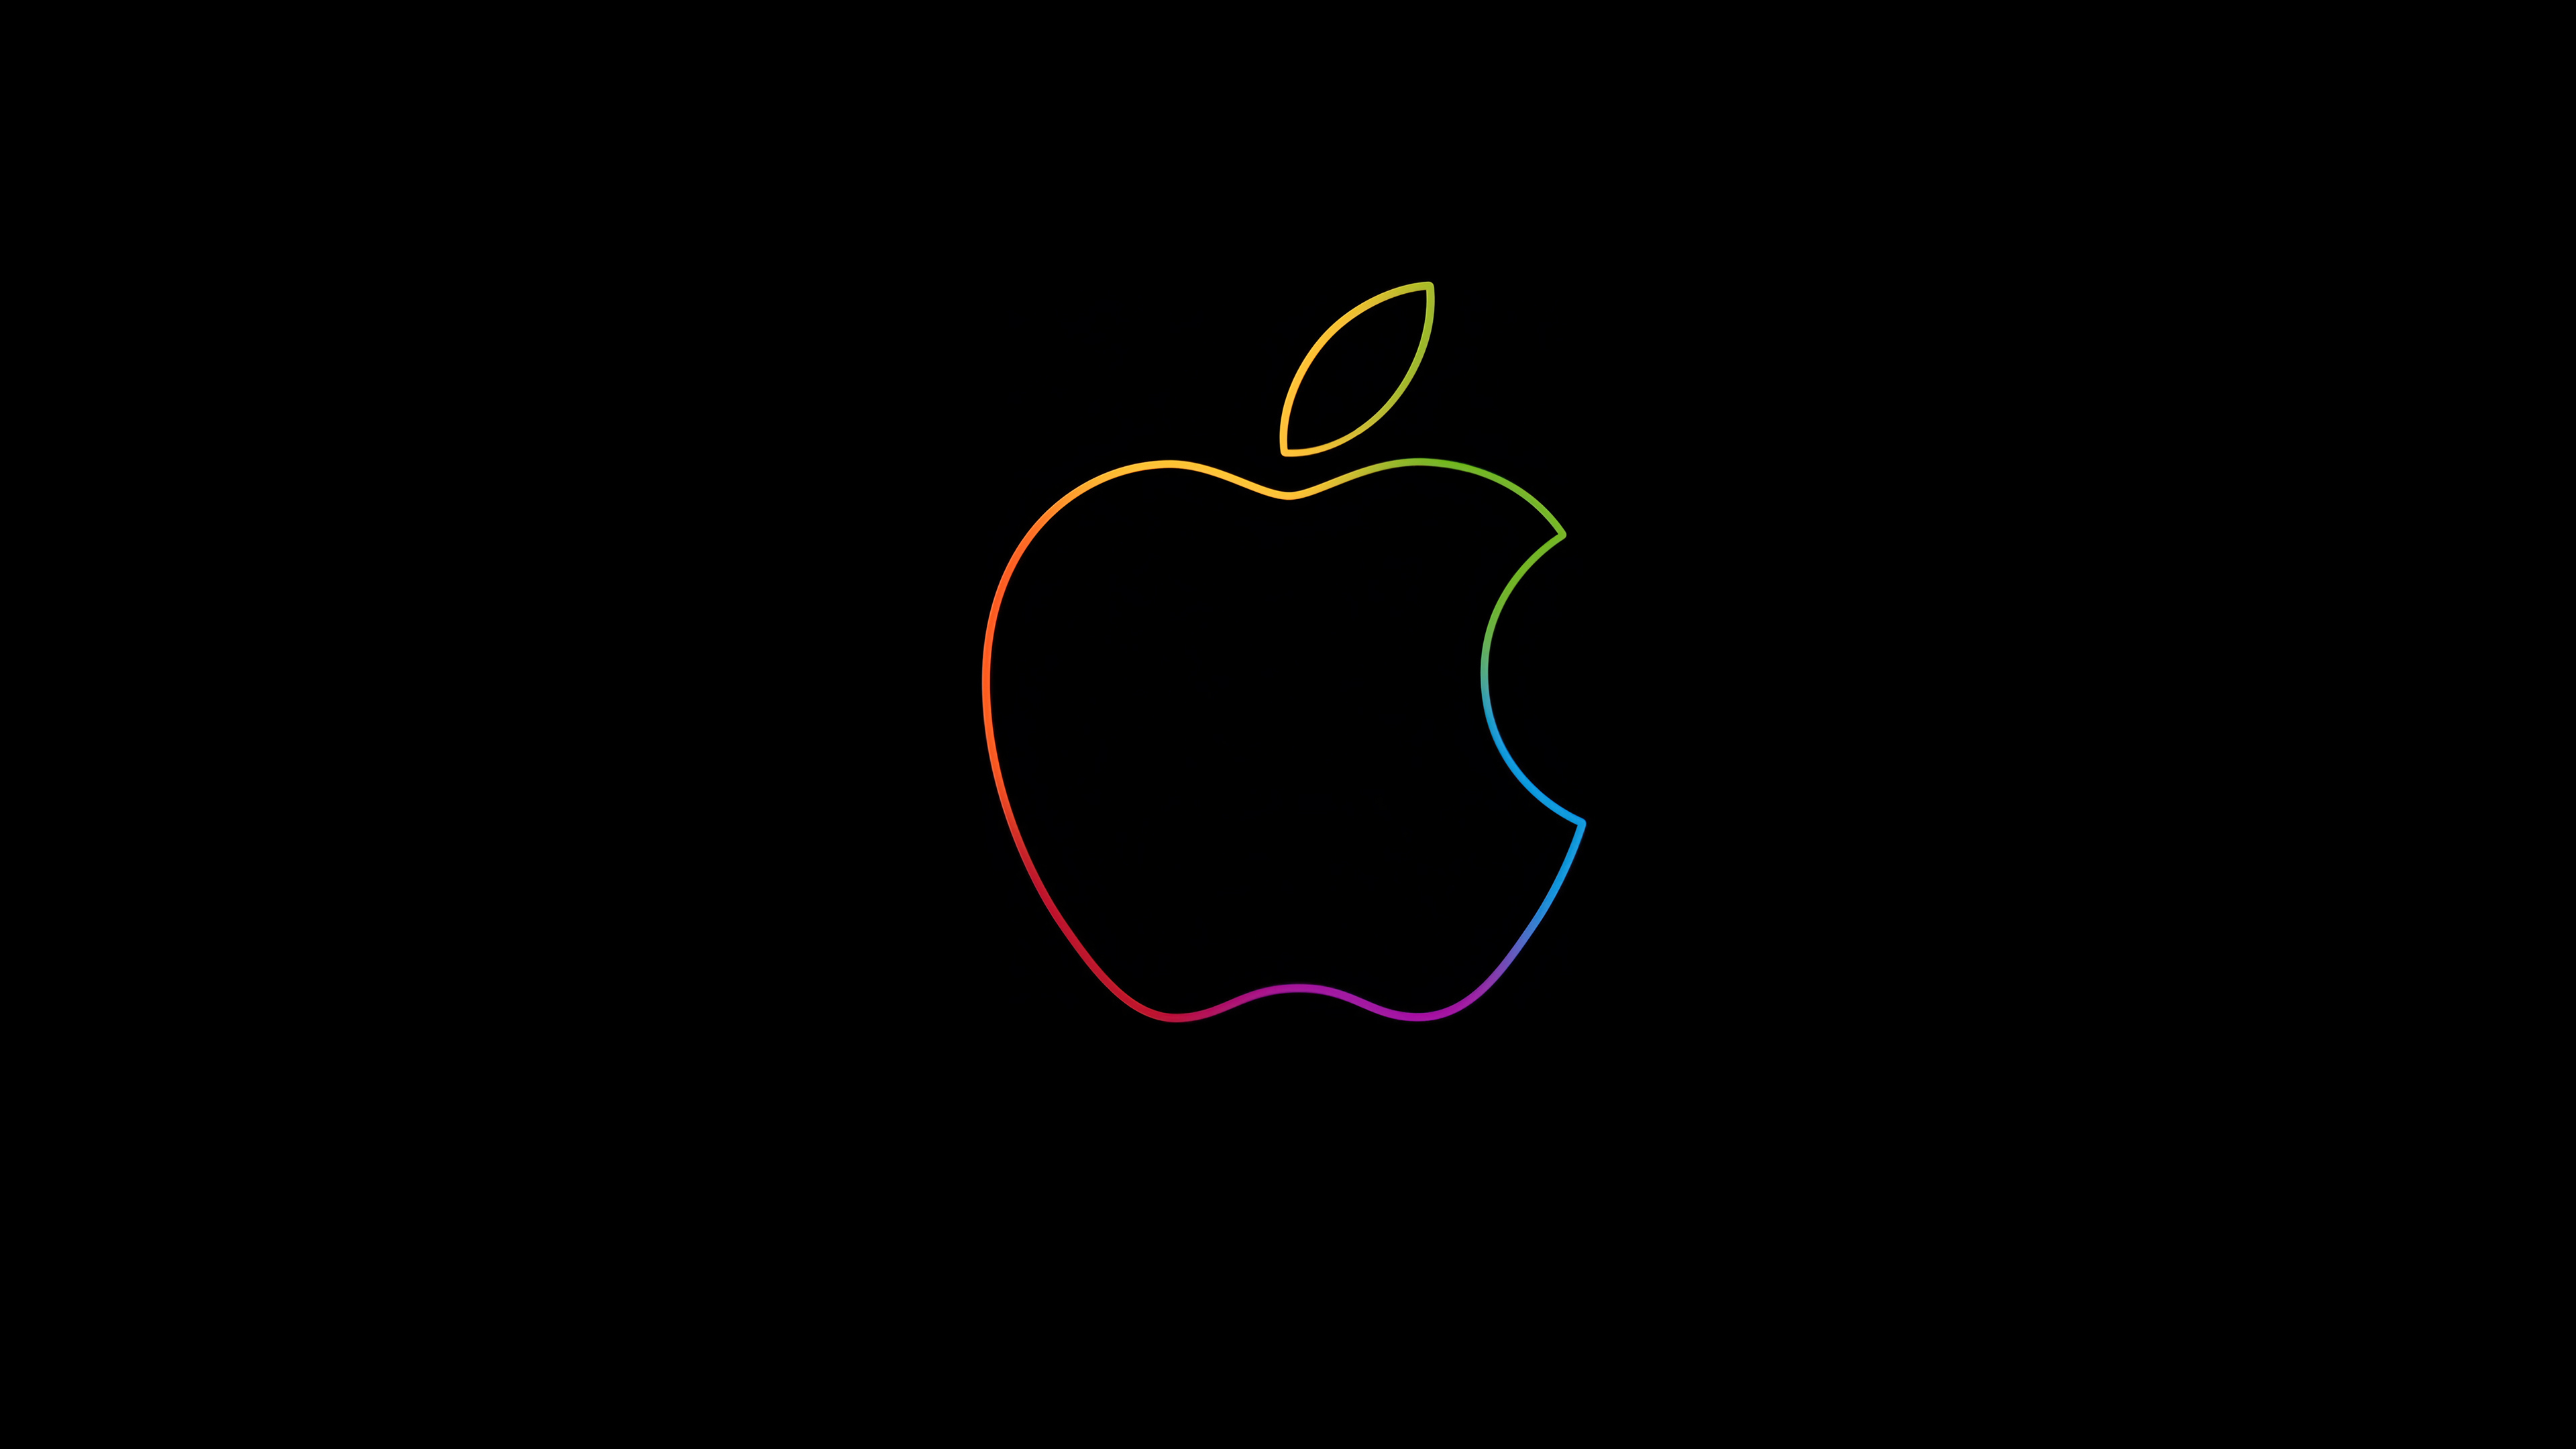 3D Apple Logo  Wallpaper by TechFlashDesigns on DeviantArt